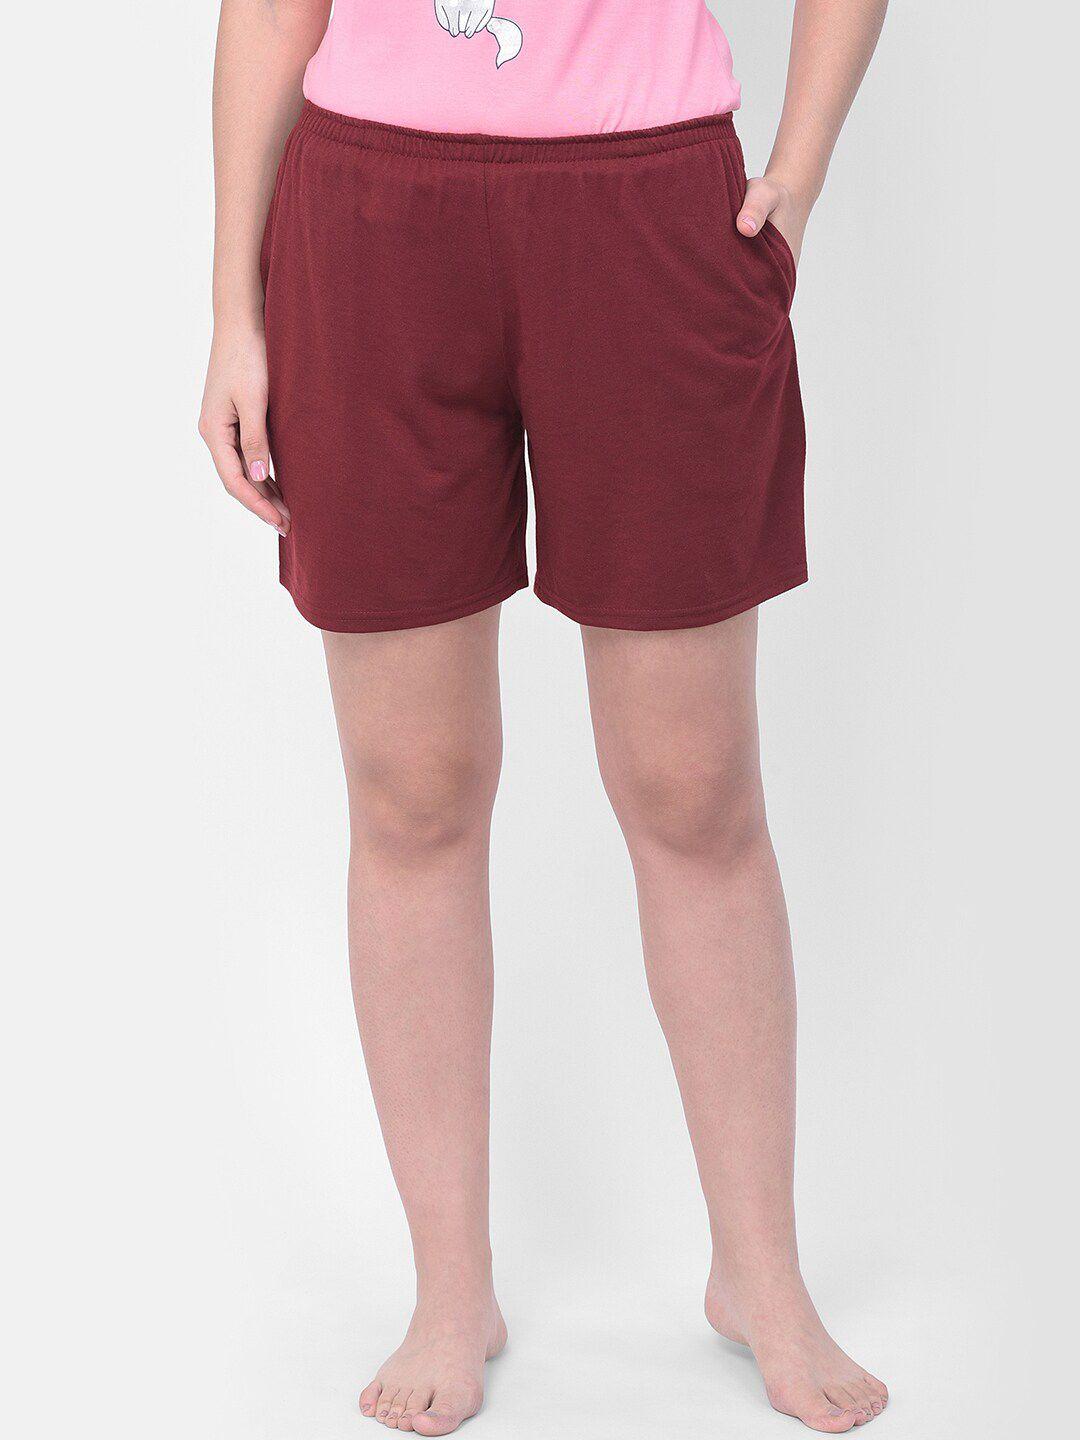 clovia-women-maroon-solid-lounge-shorts